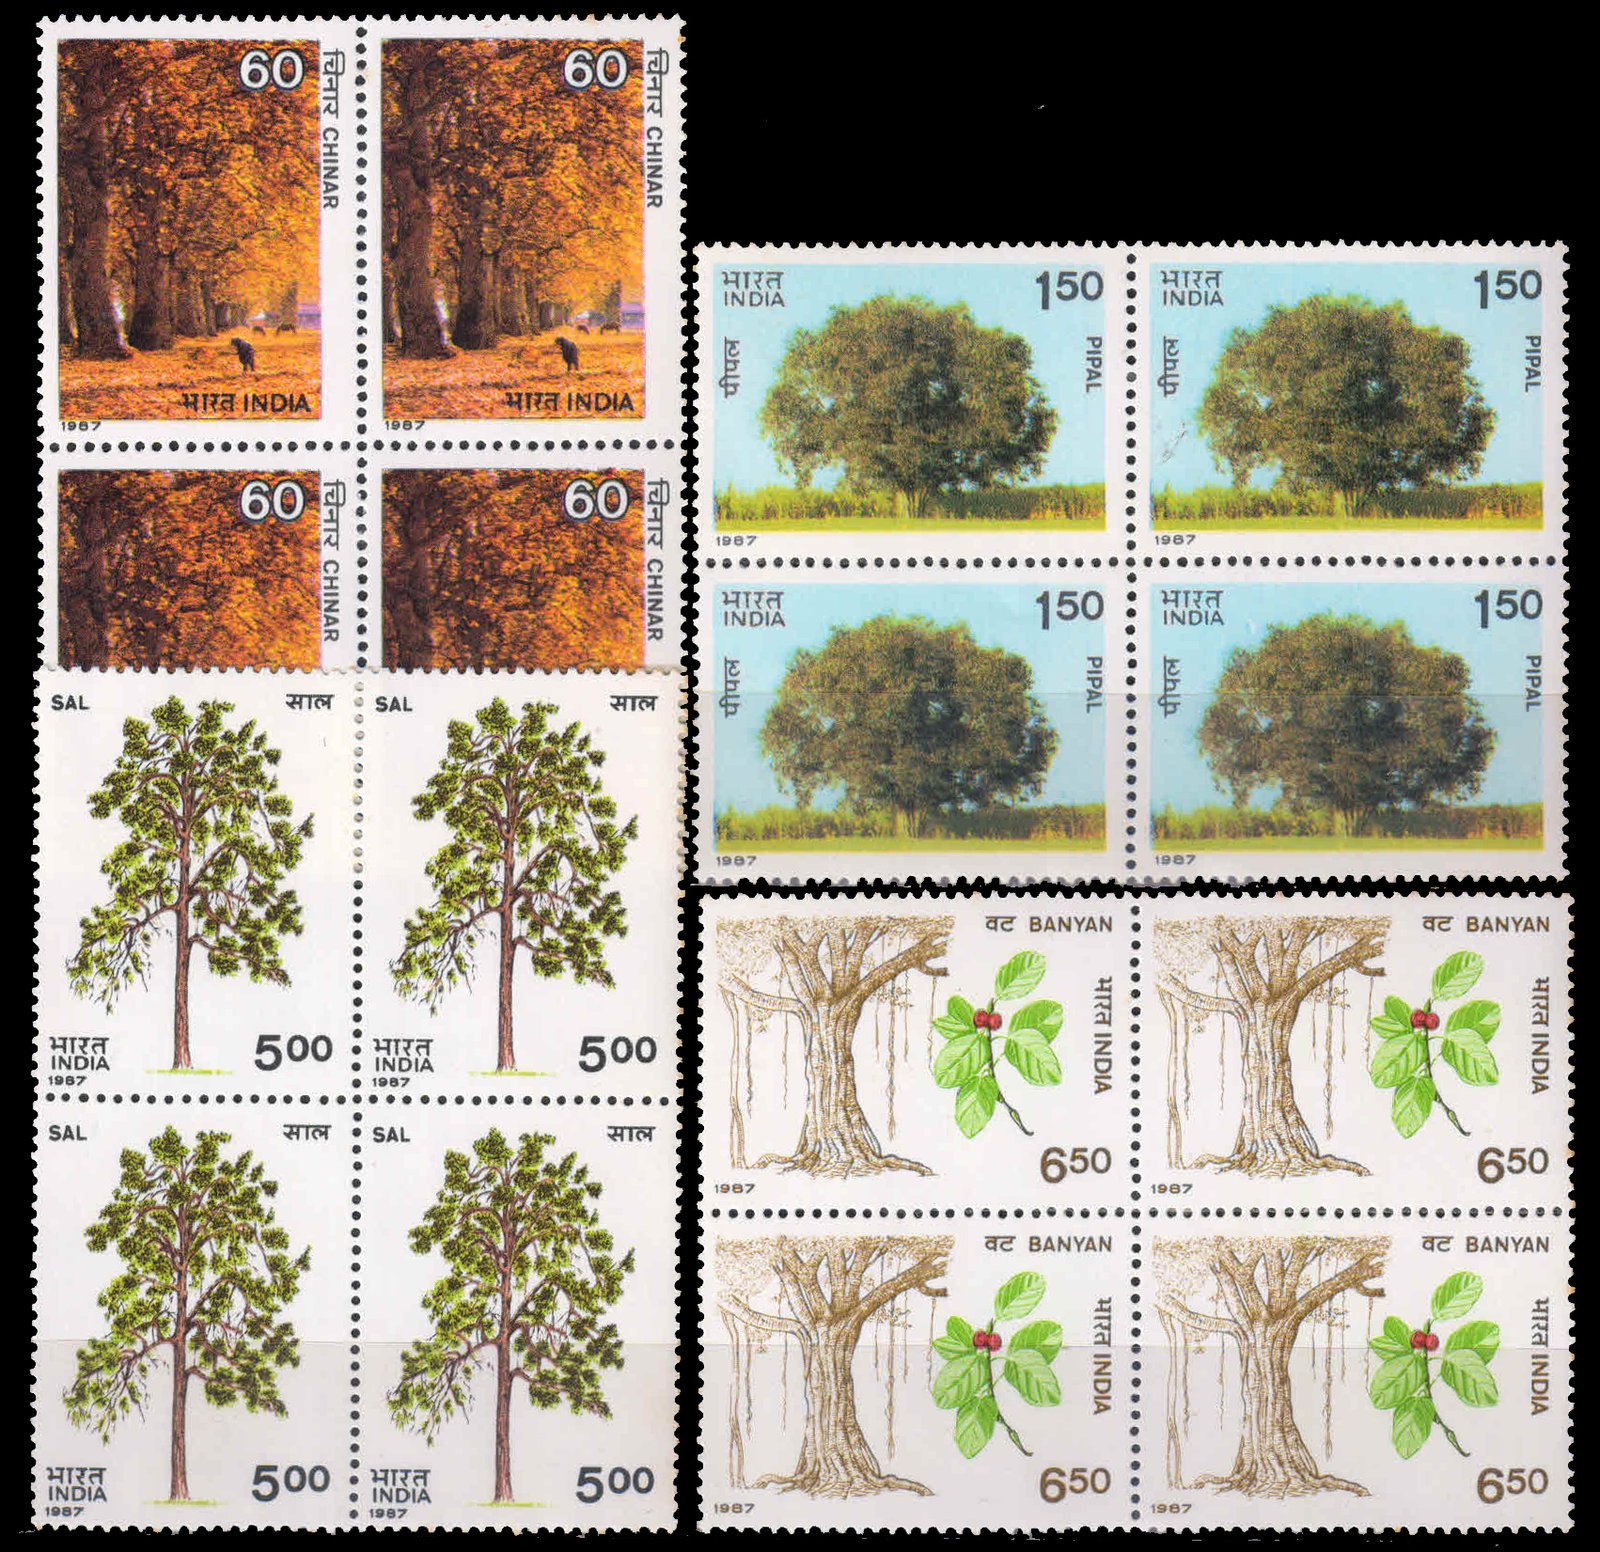 INDIA 1987-Indian Trees, Chinar, Pipal, Sal, Banyan, Set of 4 Blocks, MNH, S.G. 1271-1274-Cat � 34-